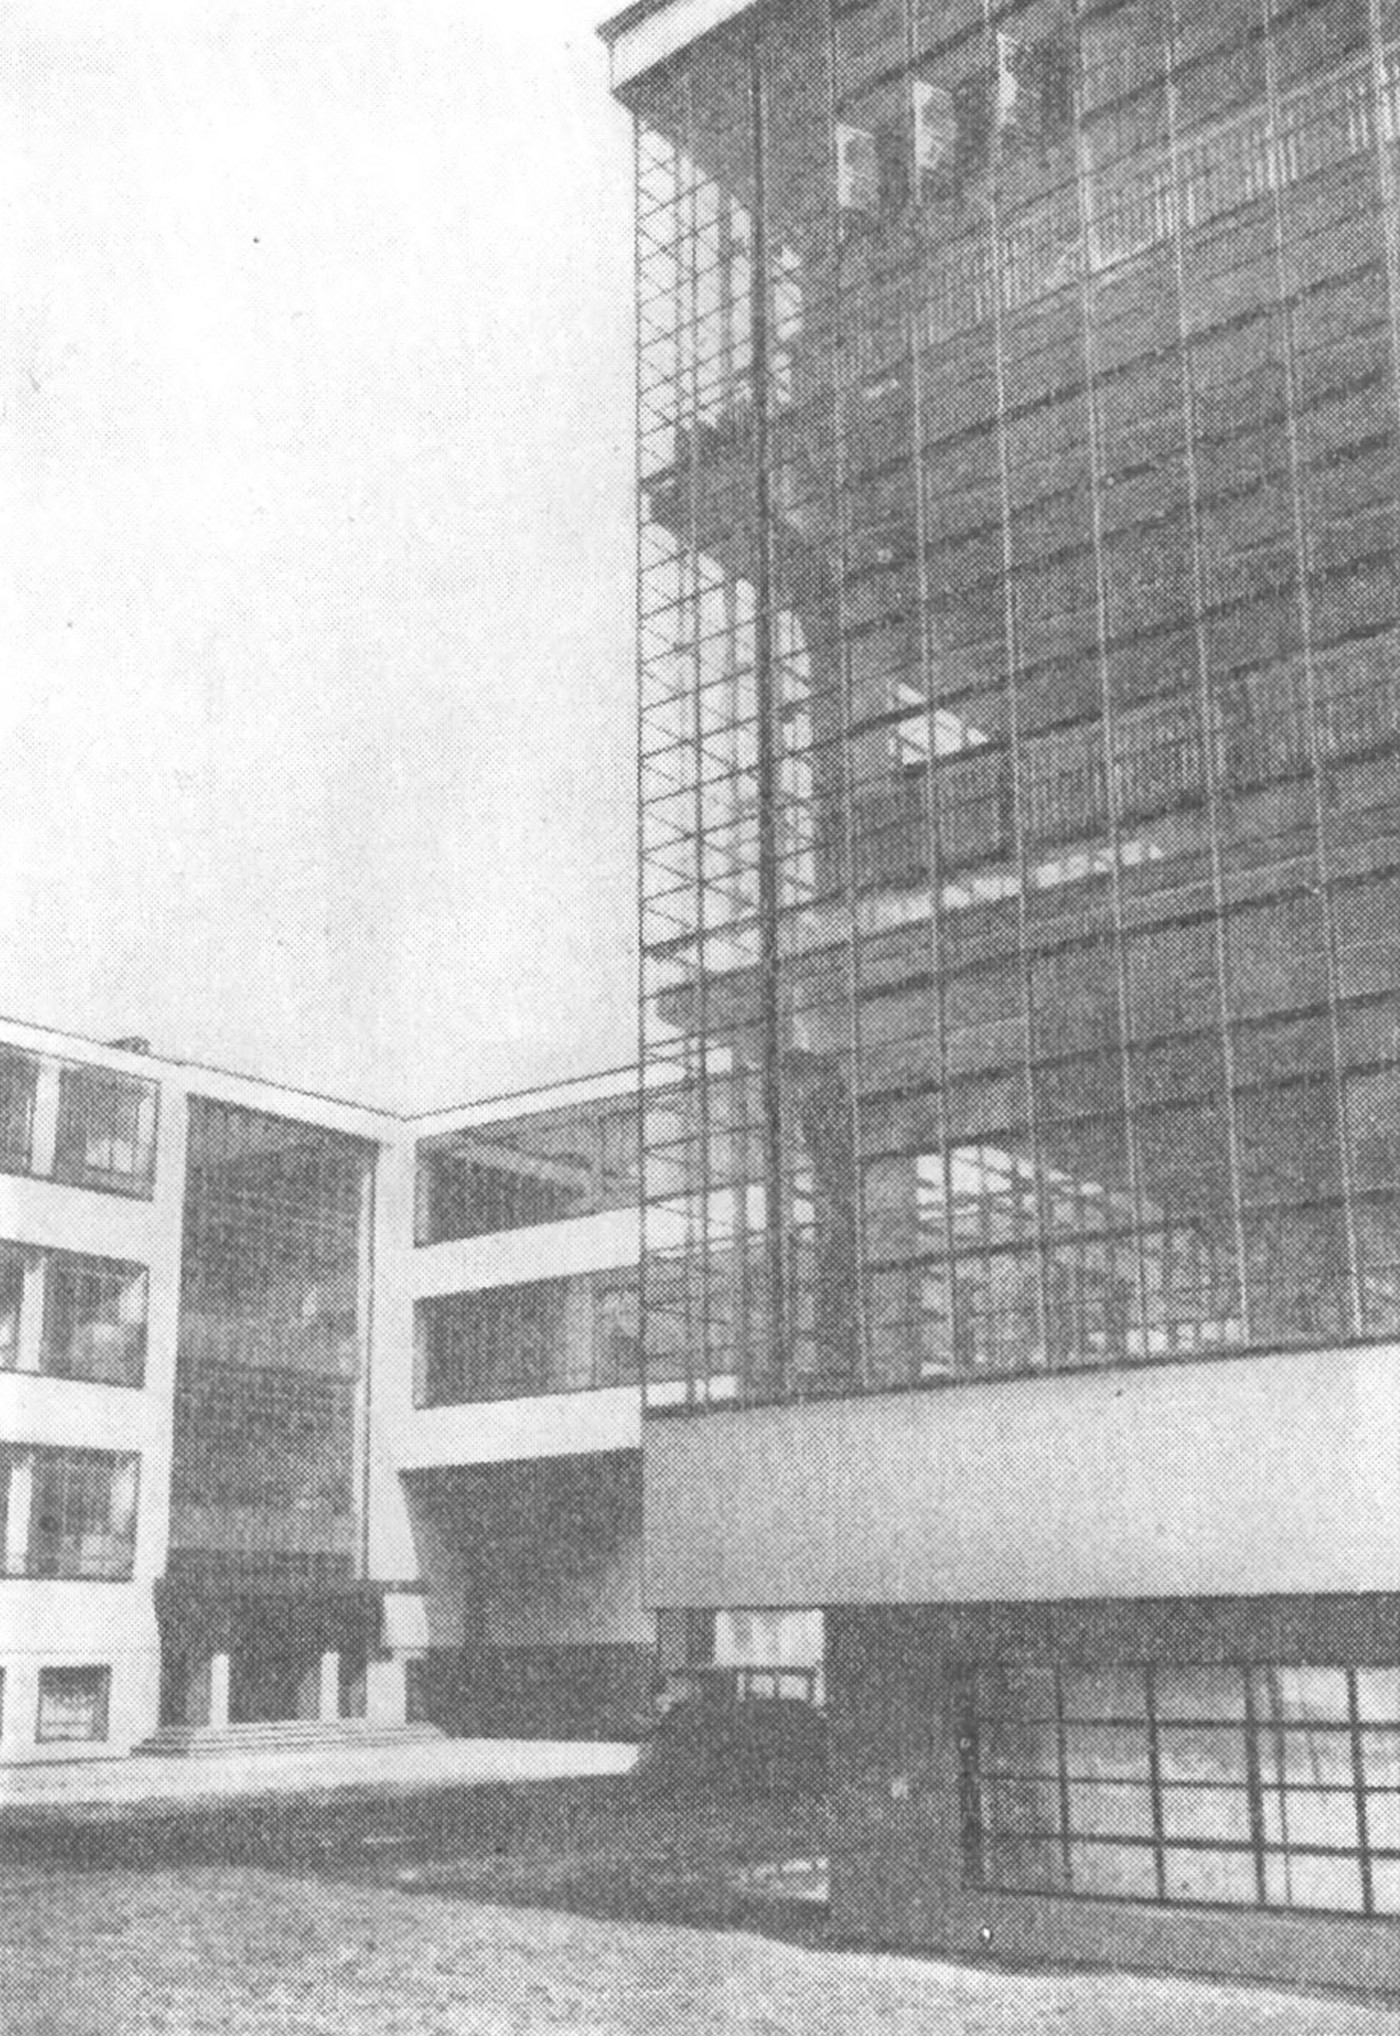 8. Дессау. Здание Баухауза, 1926 г. Арх. В. Гропиус. Общий вид, план